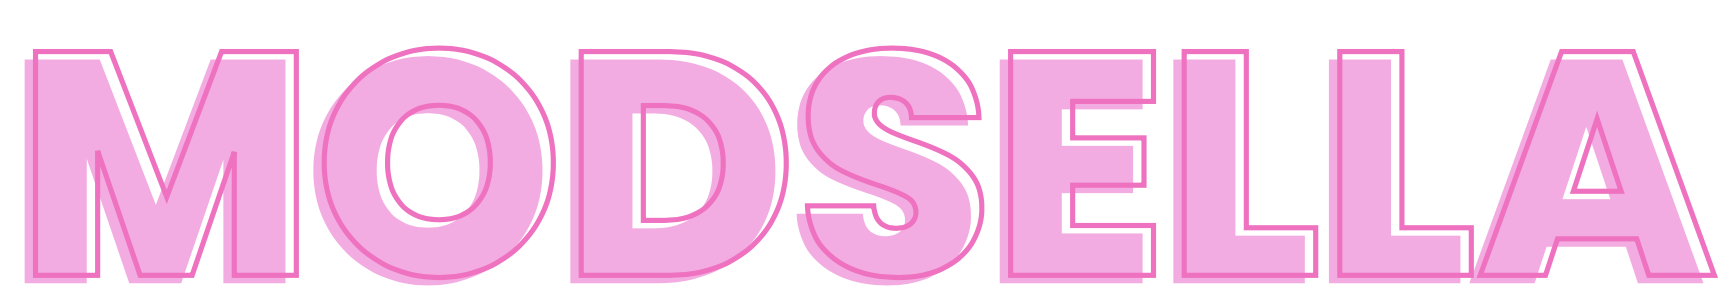 modsella logo